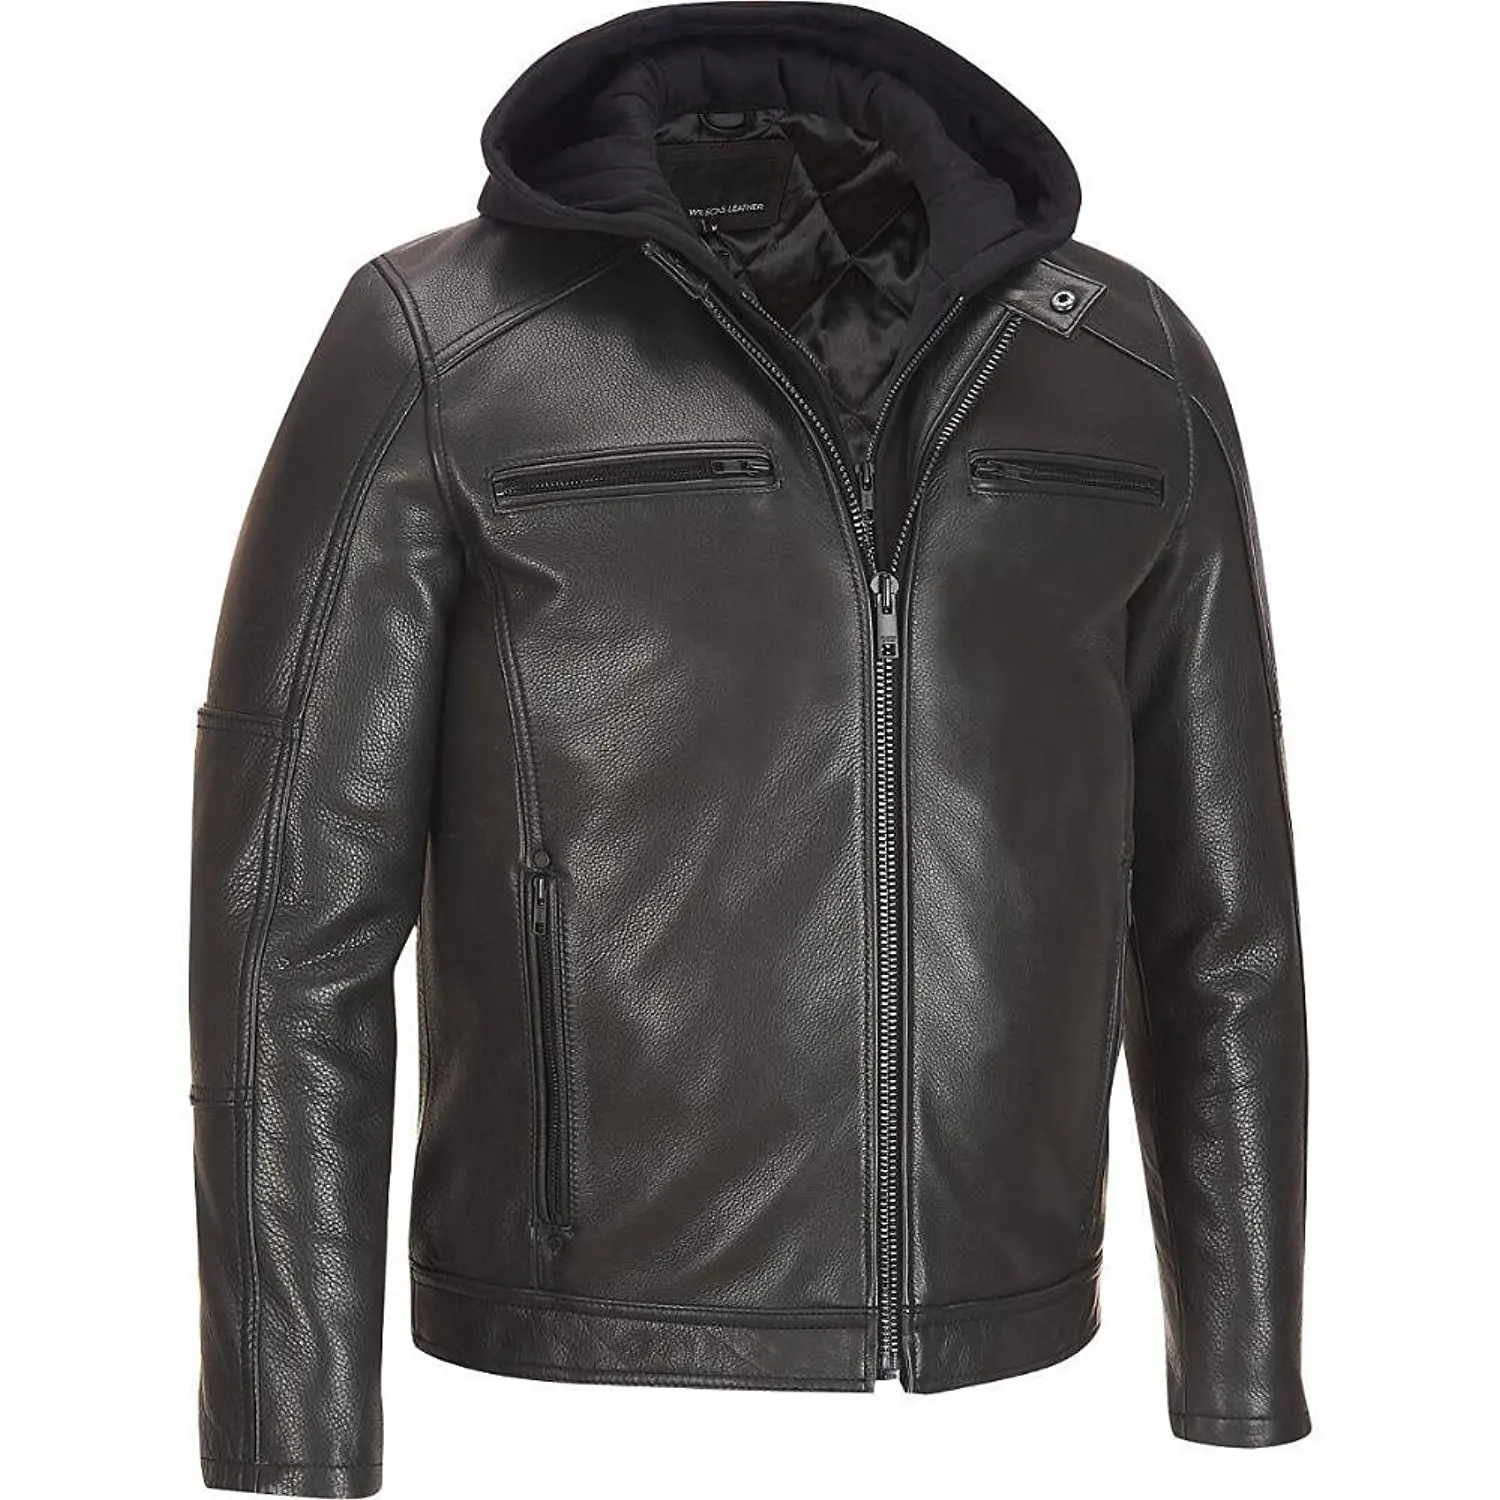 Мужские куртки тамбов. Кожаная куртка Leather Air Jacket 38118. Алеф кожаные куртки мужские. Куртка Radloff 1927 кожаная мужская. Wilsons Leather куртка.